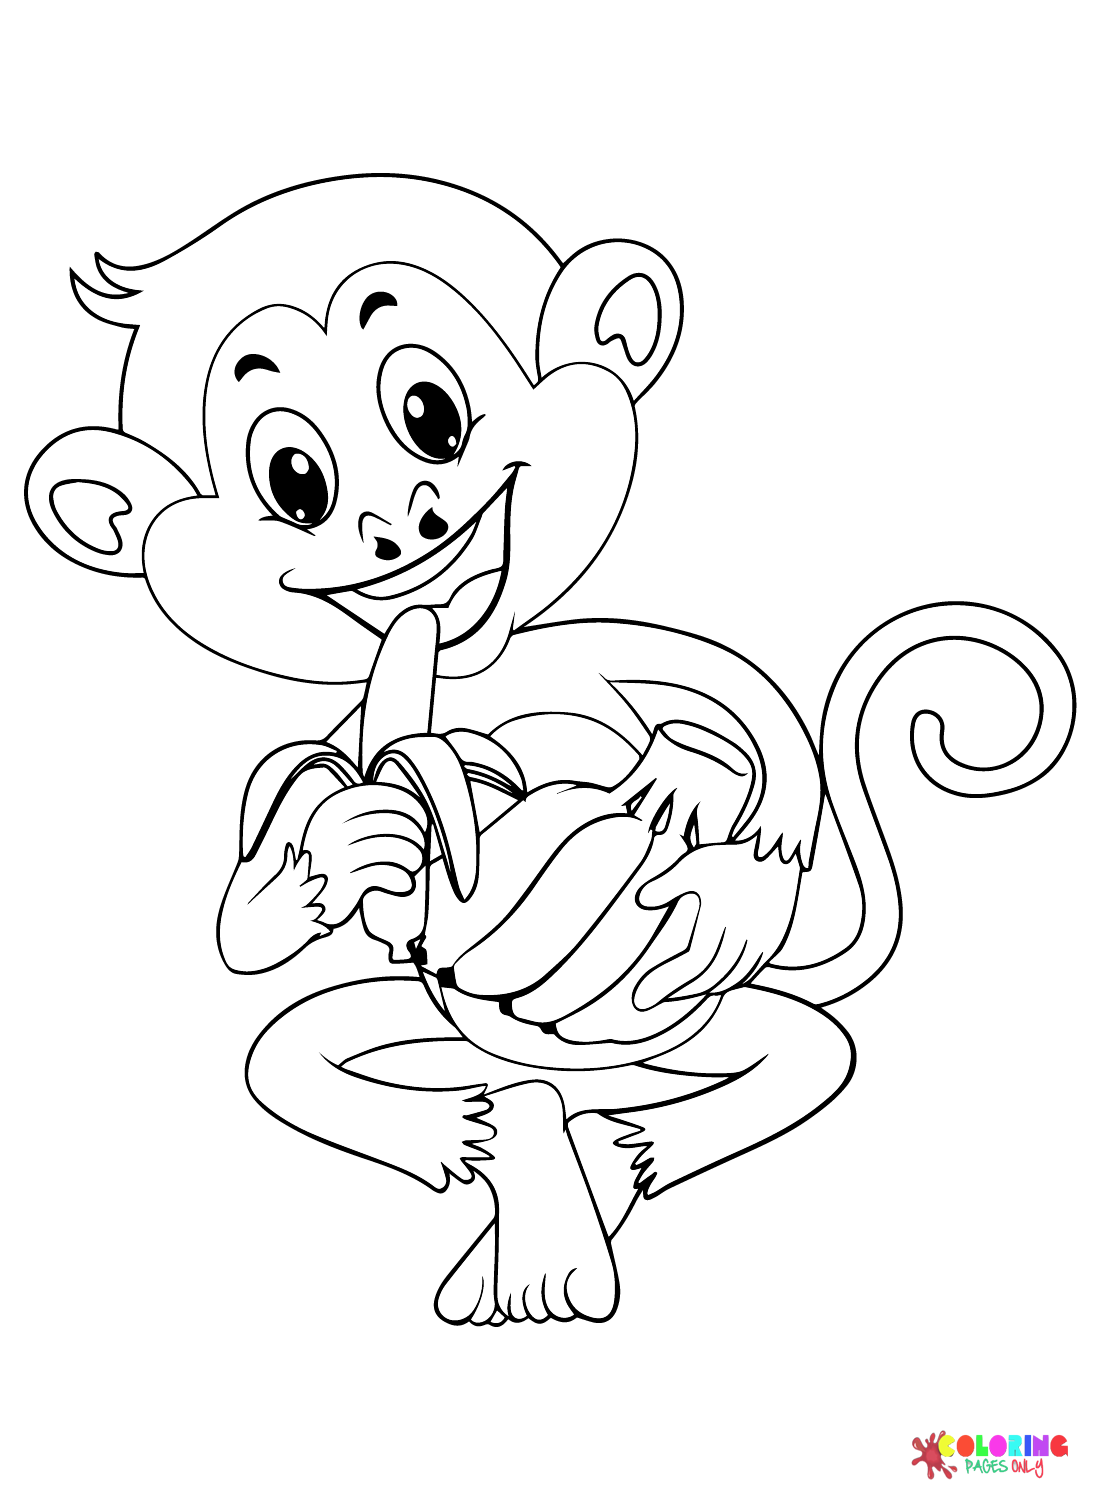 Monkey Eating Banana Coloring Pages